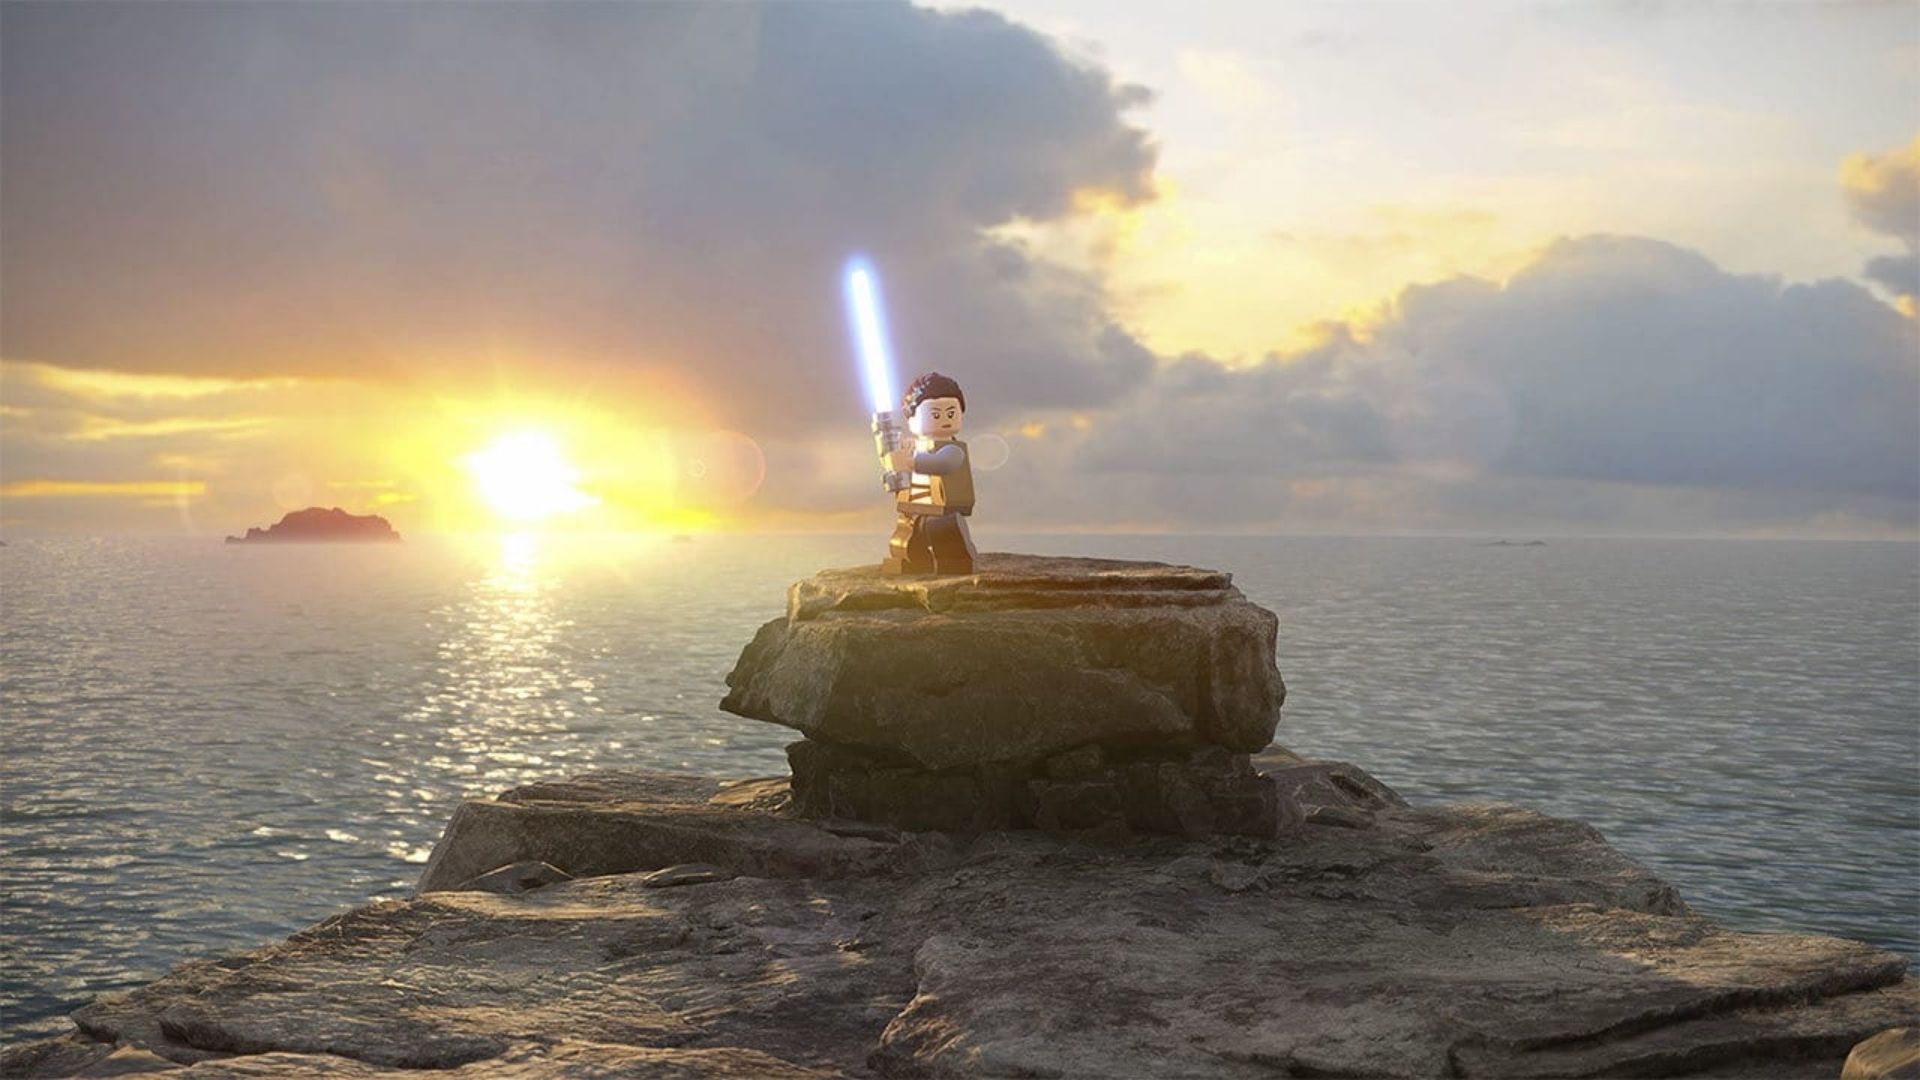 Video games releasing in April: LEGO Star Wars